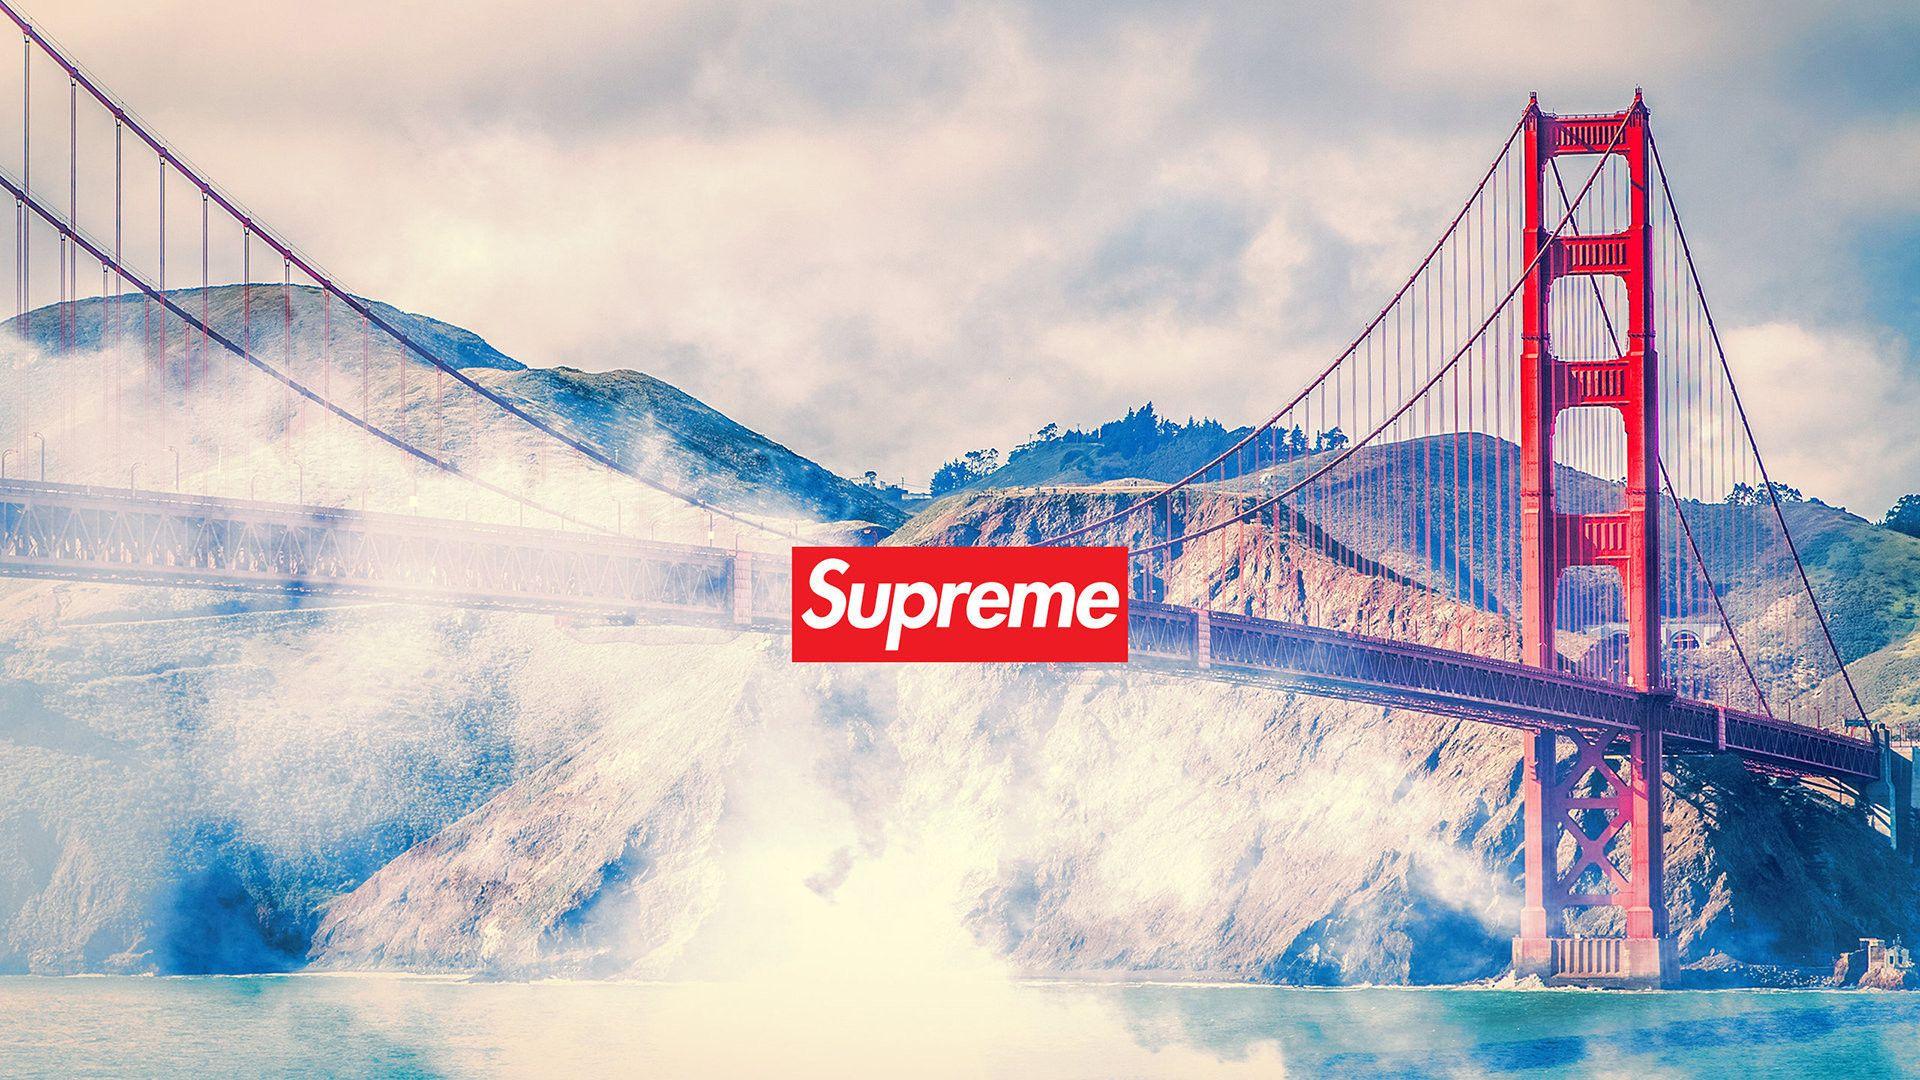 San Francisco Supreme. Sneakerheads in 2019